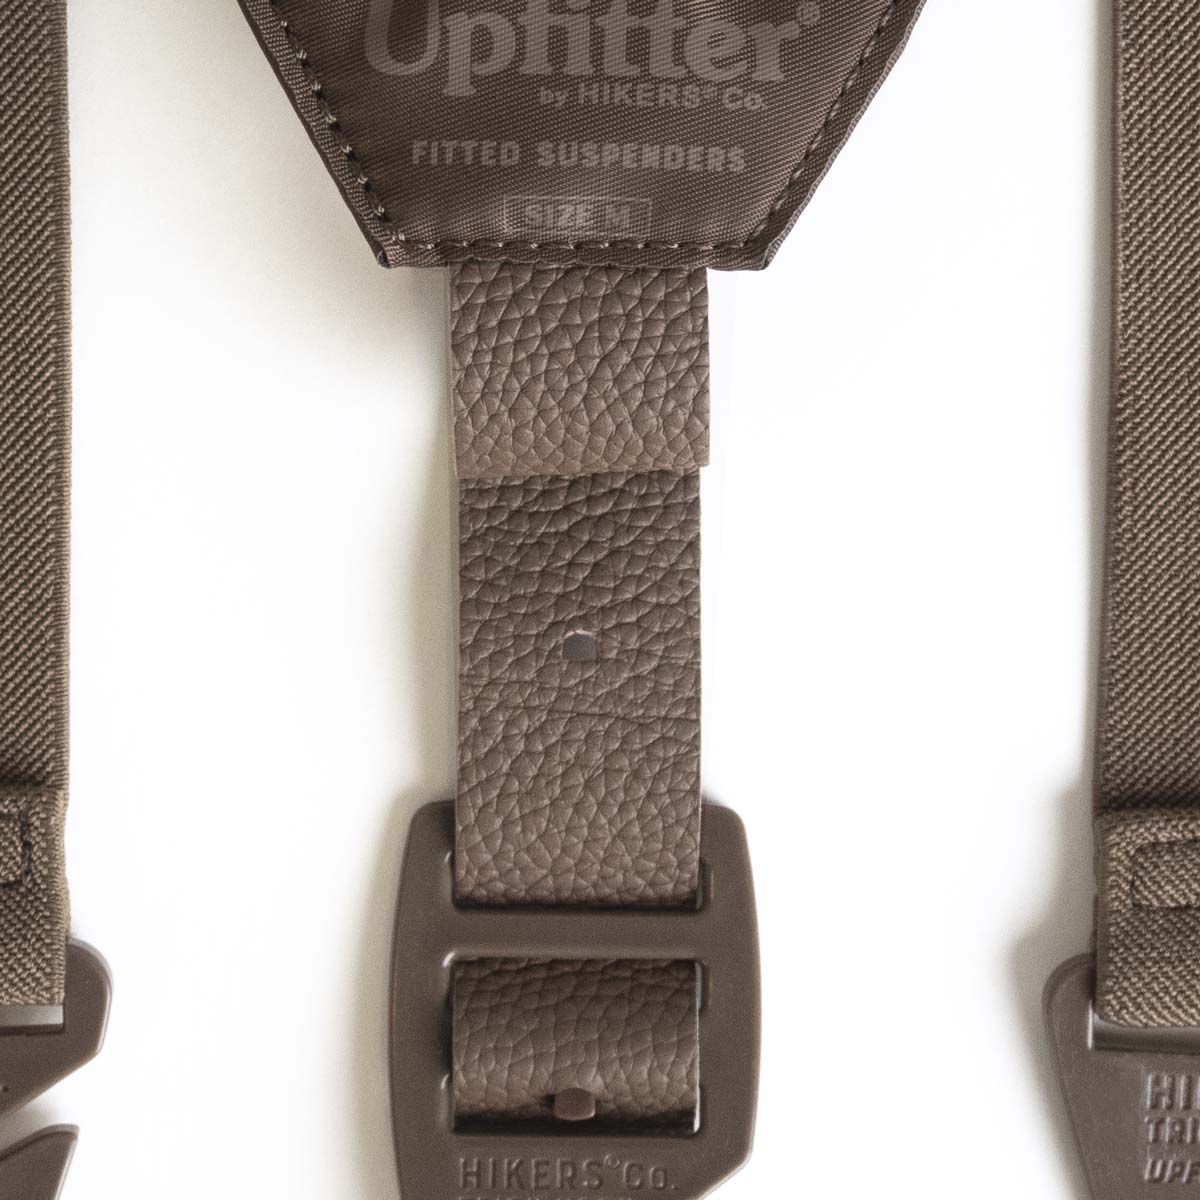 Upfitter® Belt Loop Suspenders - Gray/Black